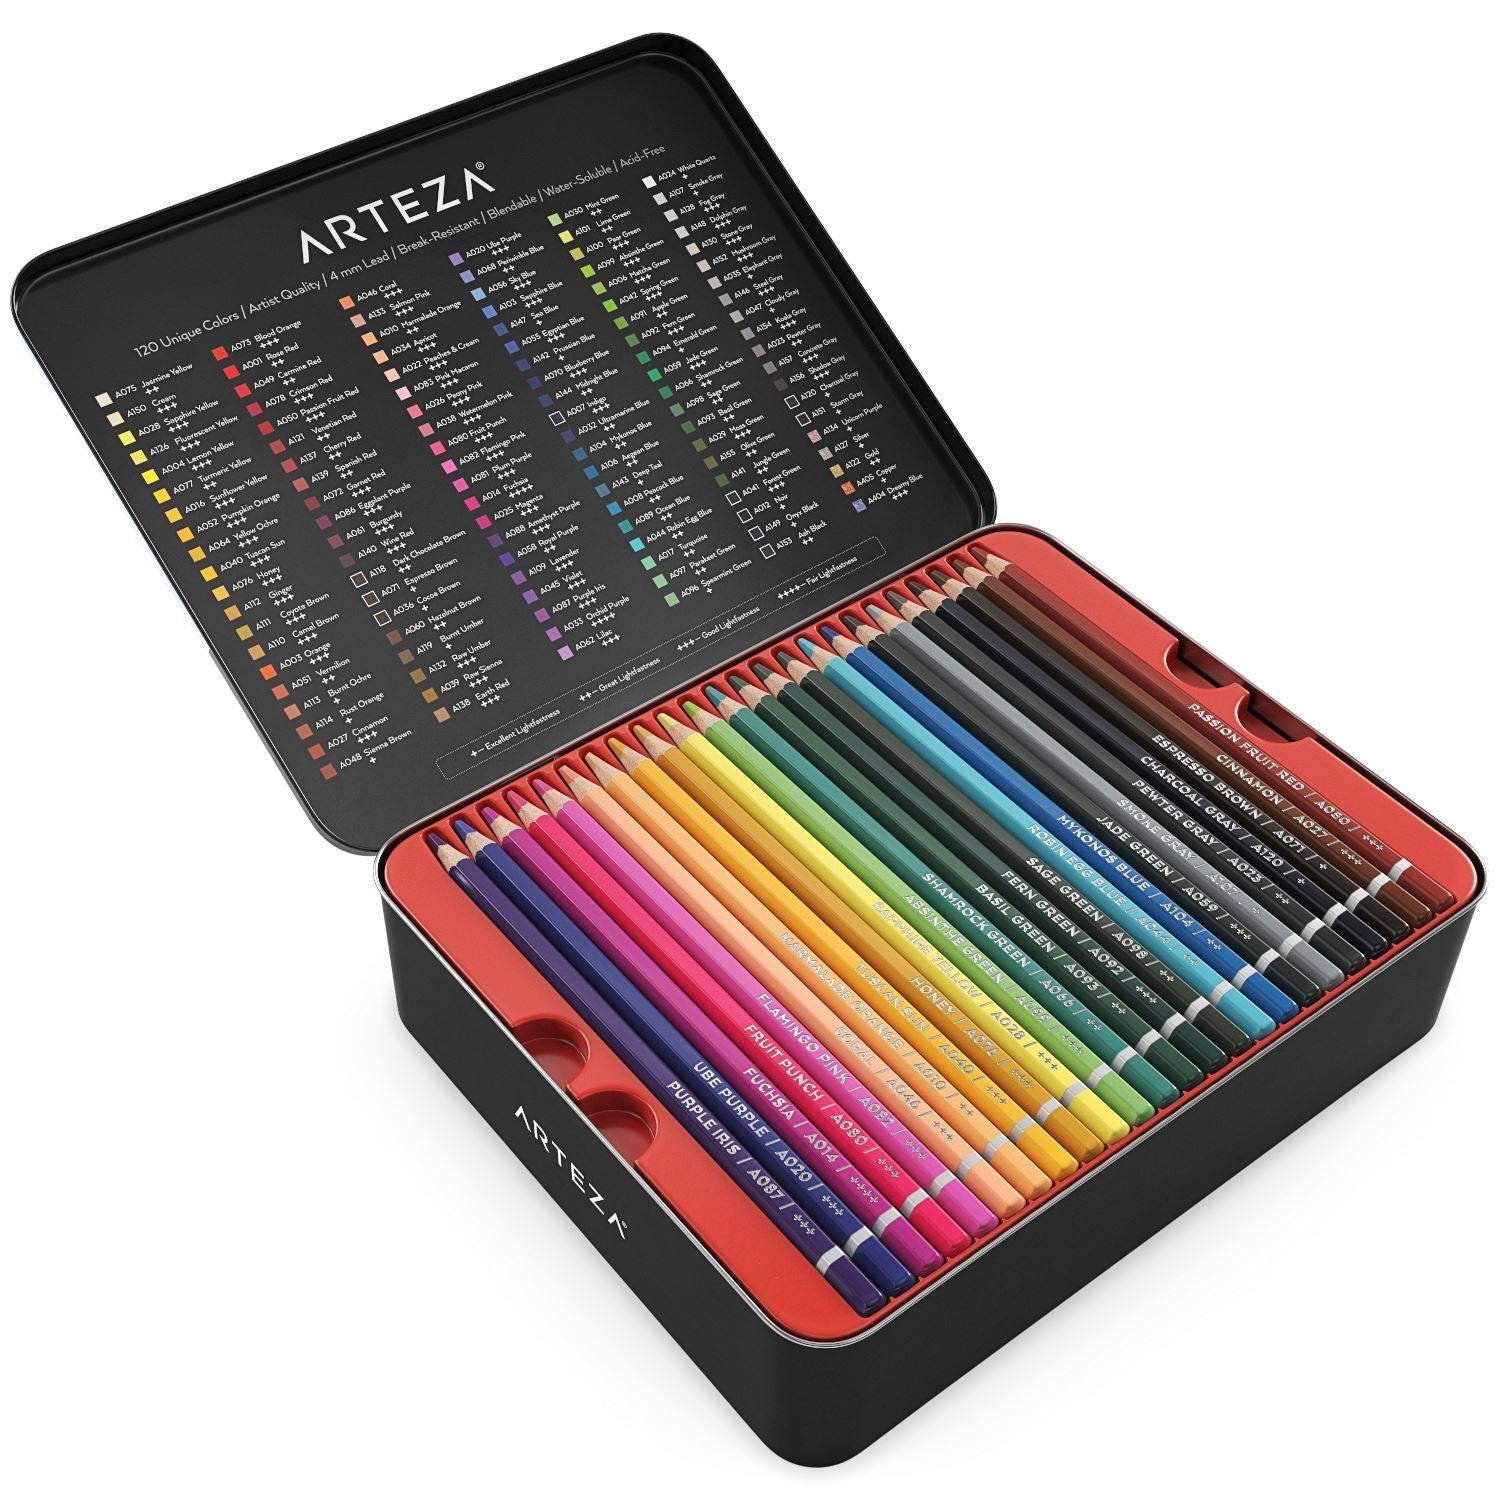 Expert Colored Pencils - Set of 120